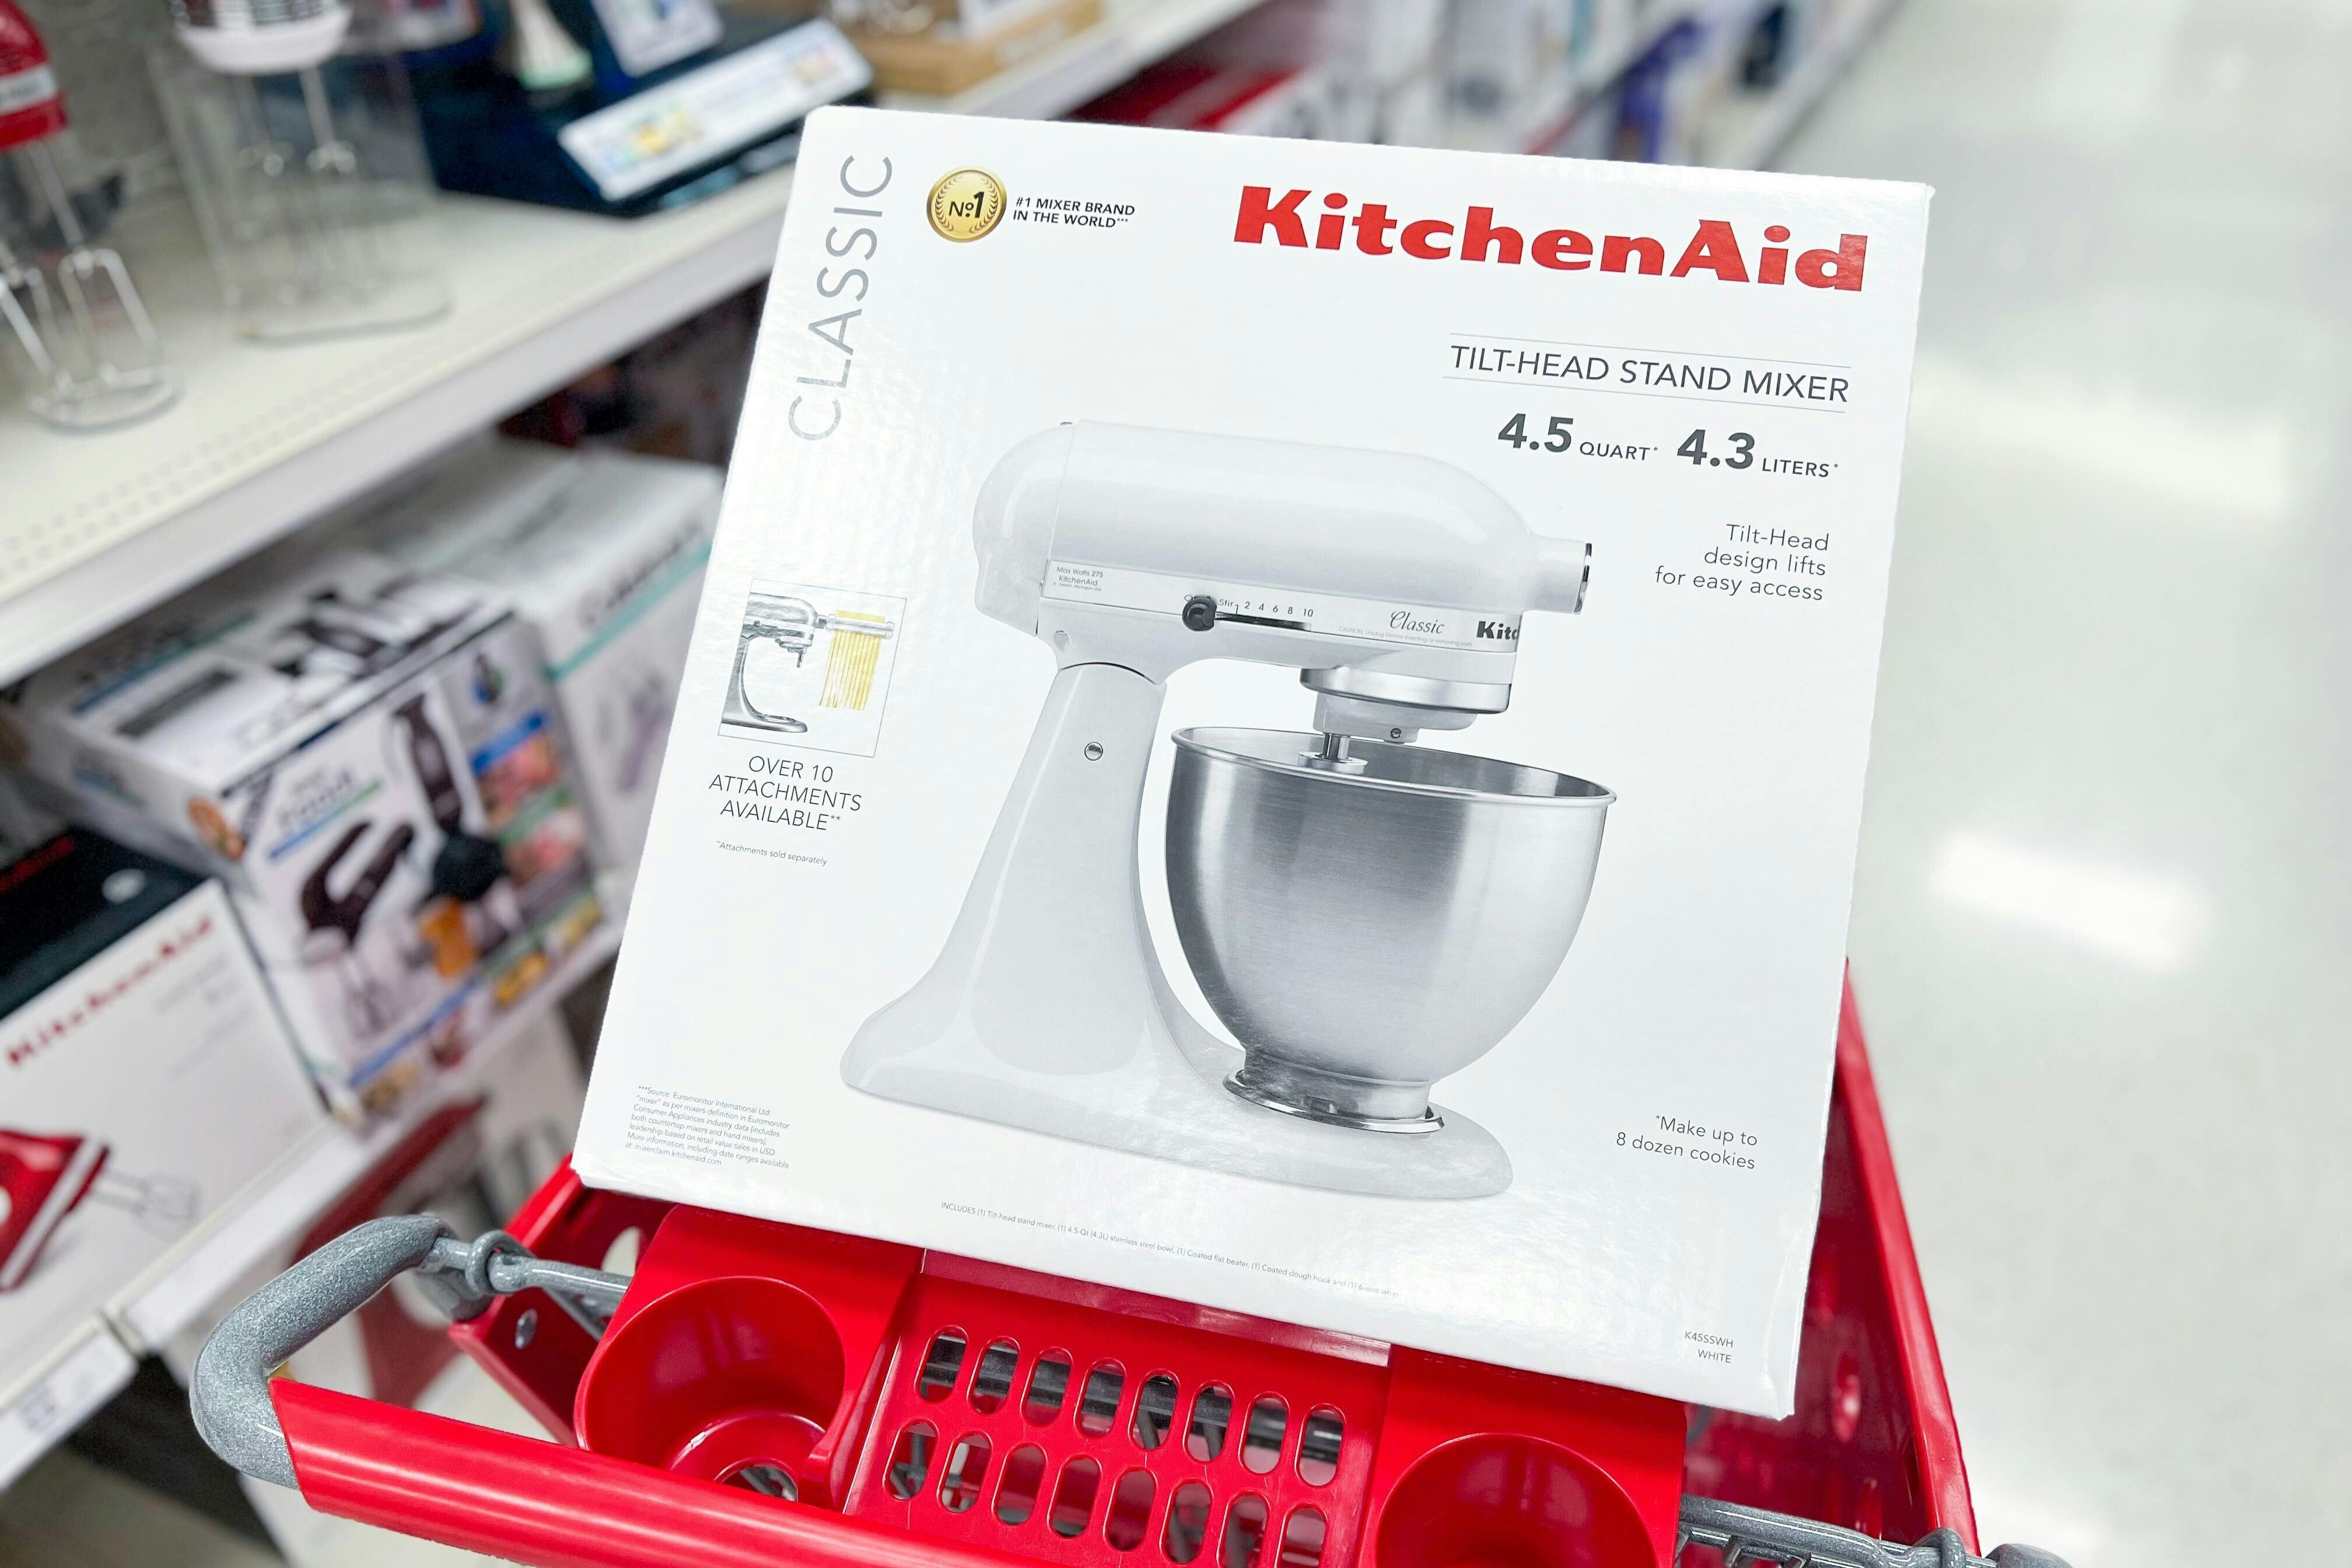 Kitchenaid 7 Quart Mixer : Target